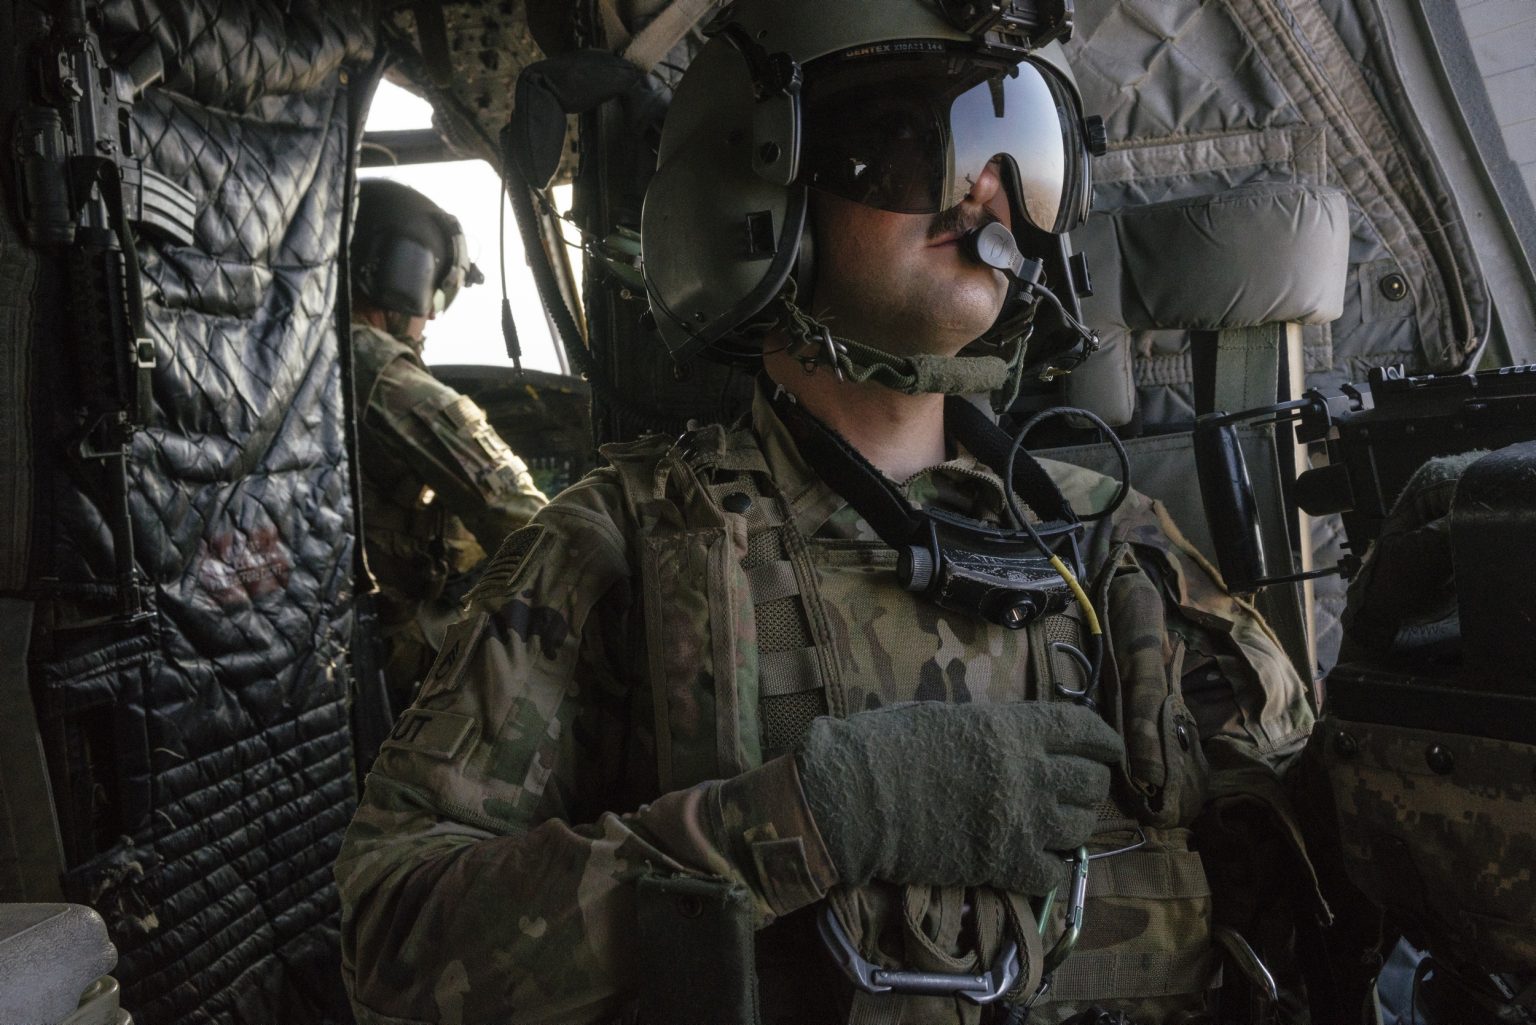 SYRIA. August 24, 2021 - U.S. Army soldiers inside a CH-47 Chinook helicopter during a flight from Erbil Air Base to a remote U.S. Army combat outpost in northeastern Syria known as RLZ.

SIRIA. 24 agosto 2021 - Soldati dell'esercito americano all'interno di un elicottero Chinook CH-47 durante un volo dalla base aerea di Erbil a un remoto avamposto di combattimento dell'esercito degli Stati Uniti nel nord-est della Siria, noto come RLZ.